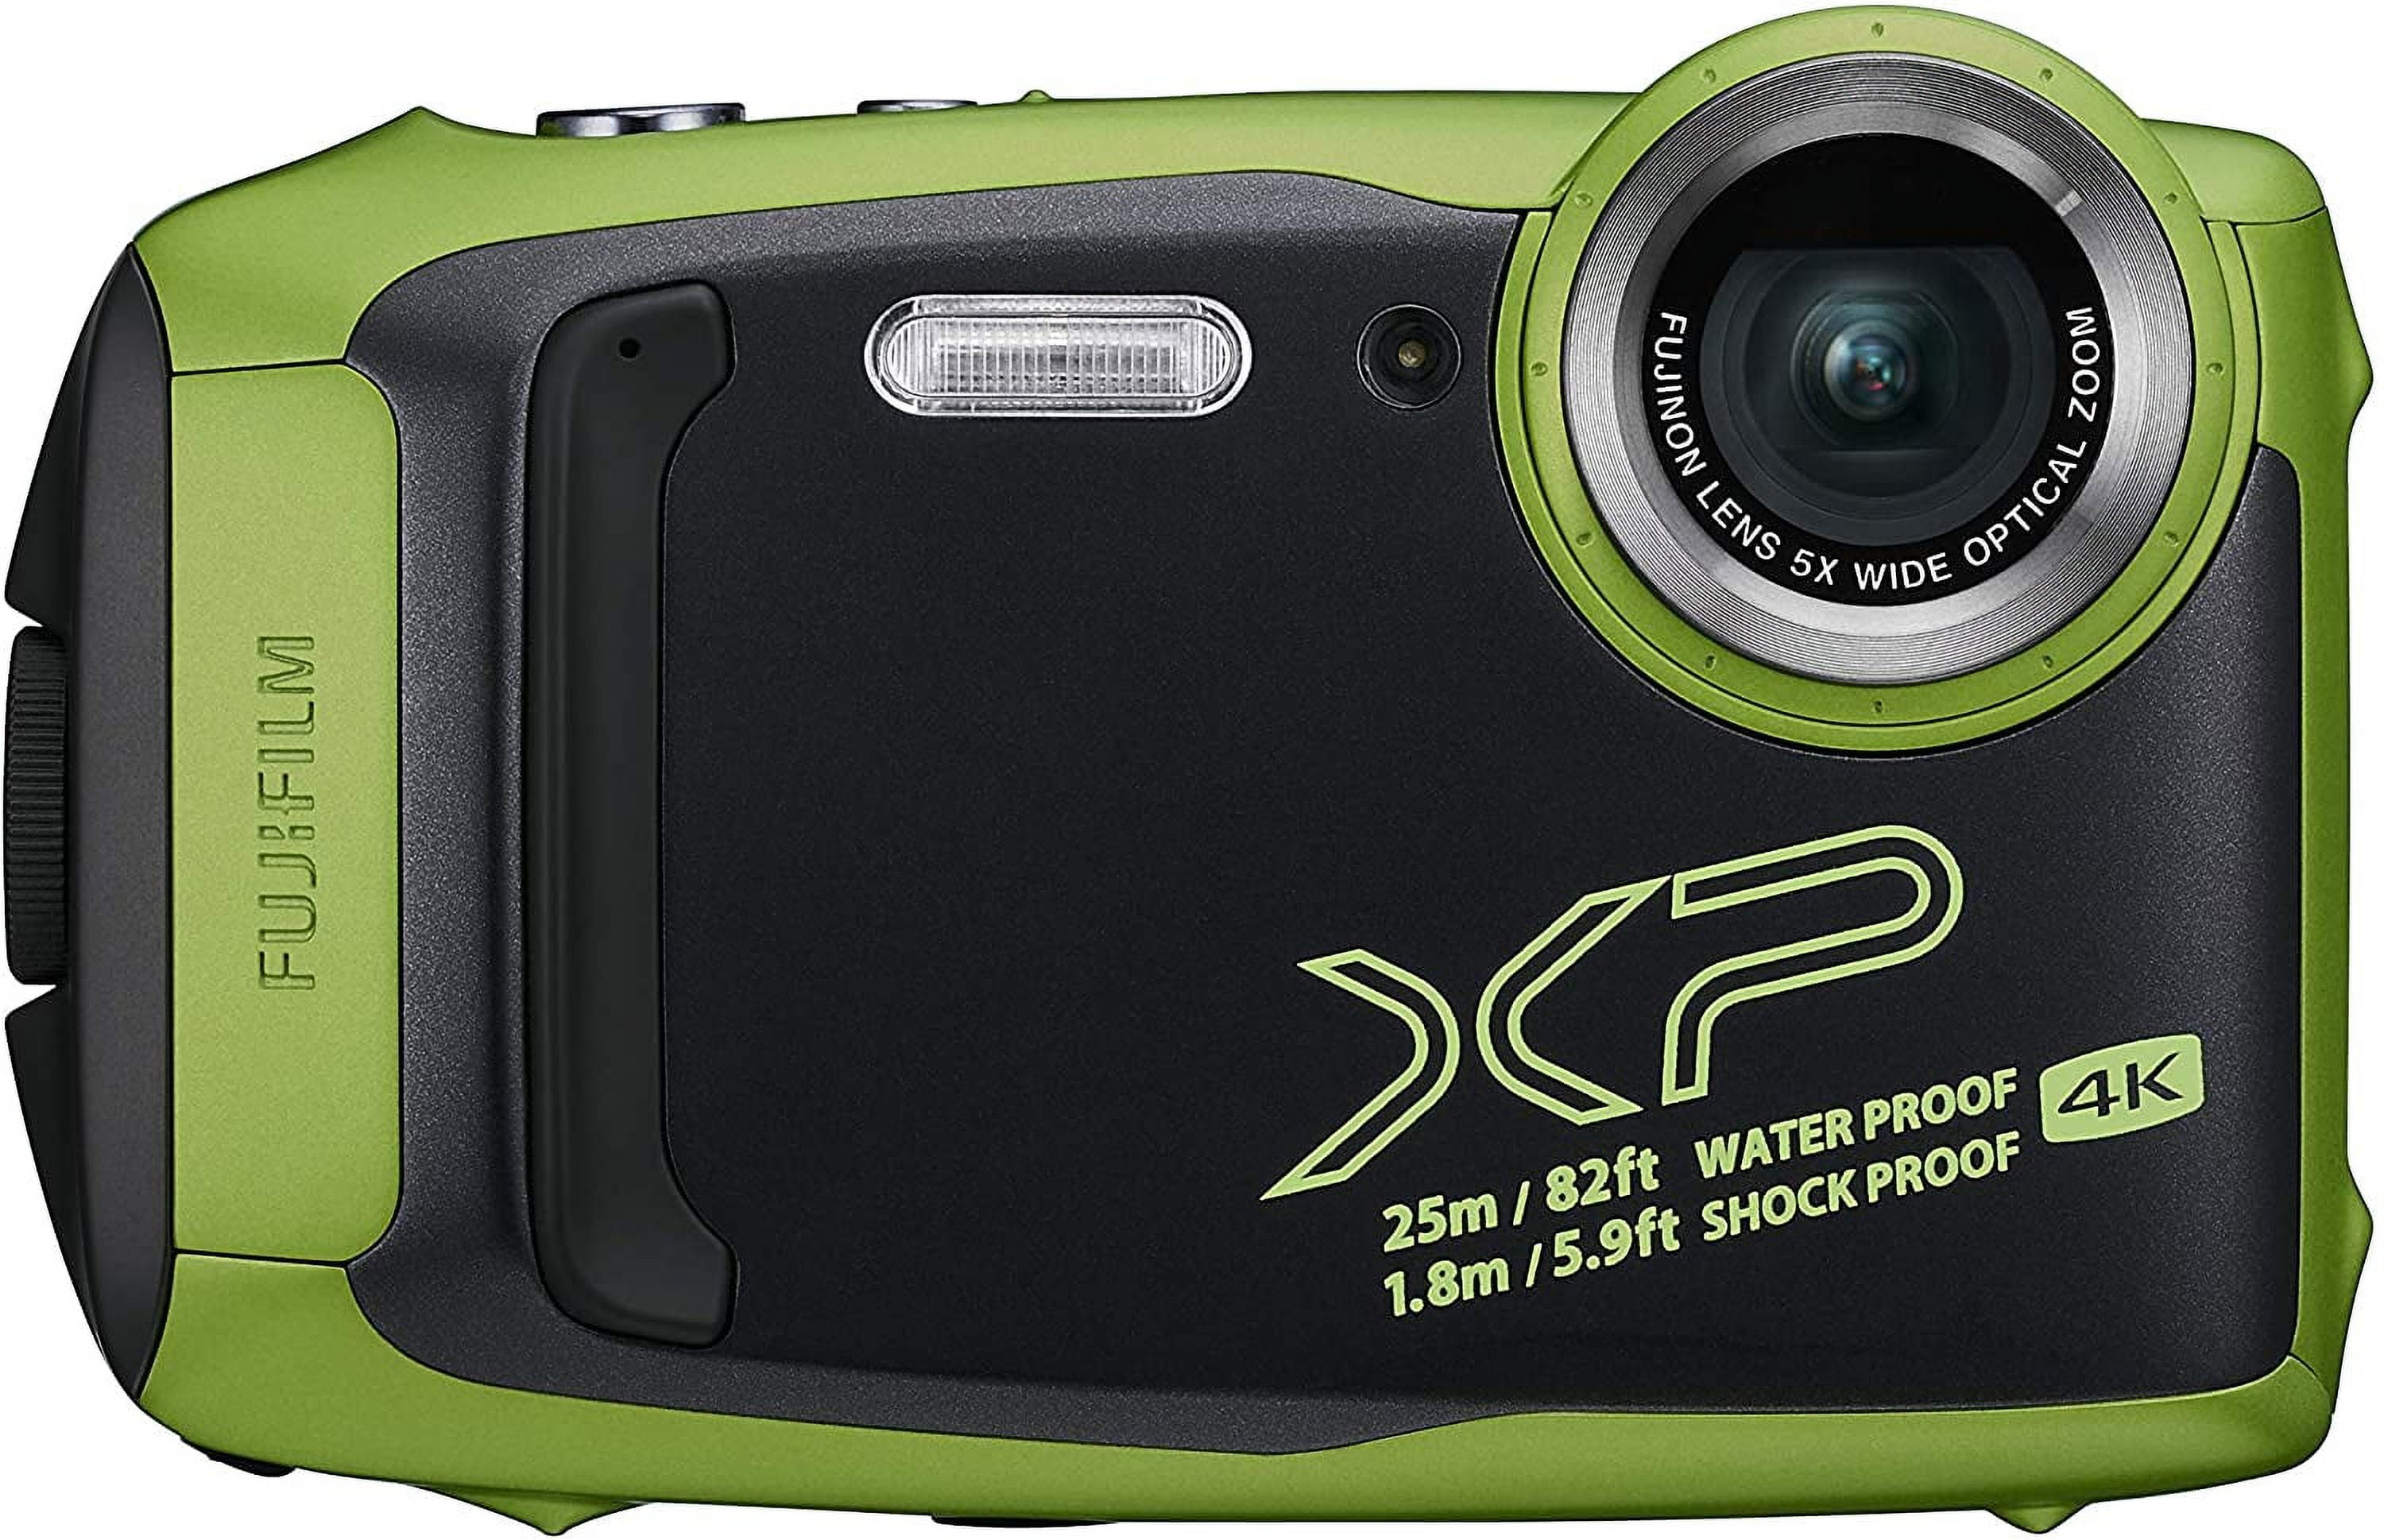 Fujifilm FinePix XP140 Waterproof Digital Camera (Sky Blue) with 